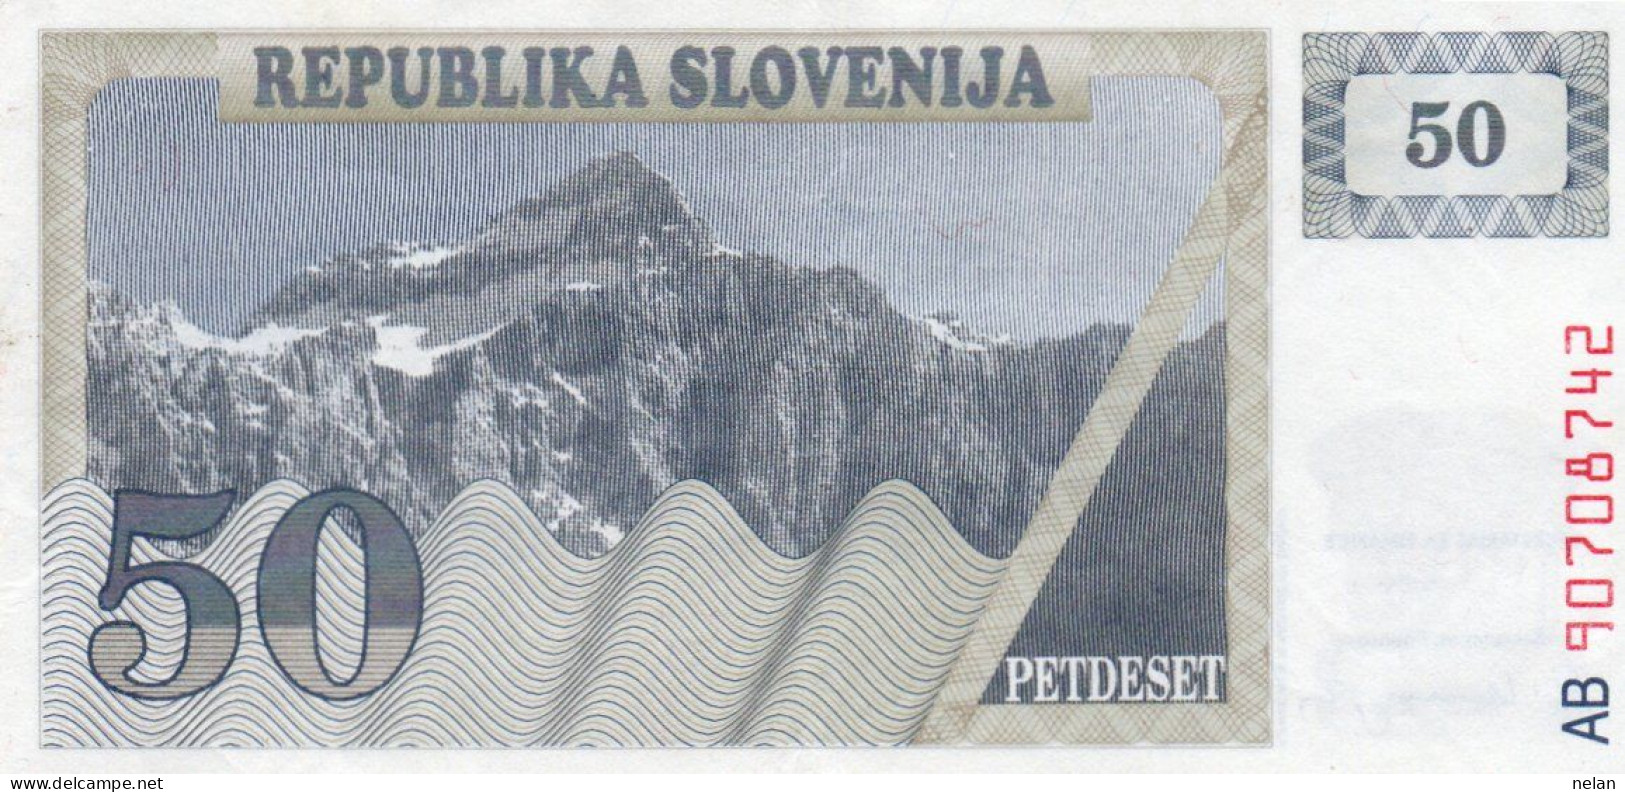 SLOVENIA 50 TOLARJEV 1990 P-5a  XF PREFIX AB - Slowenien